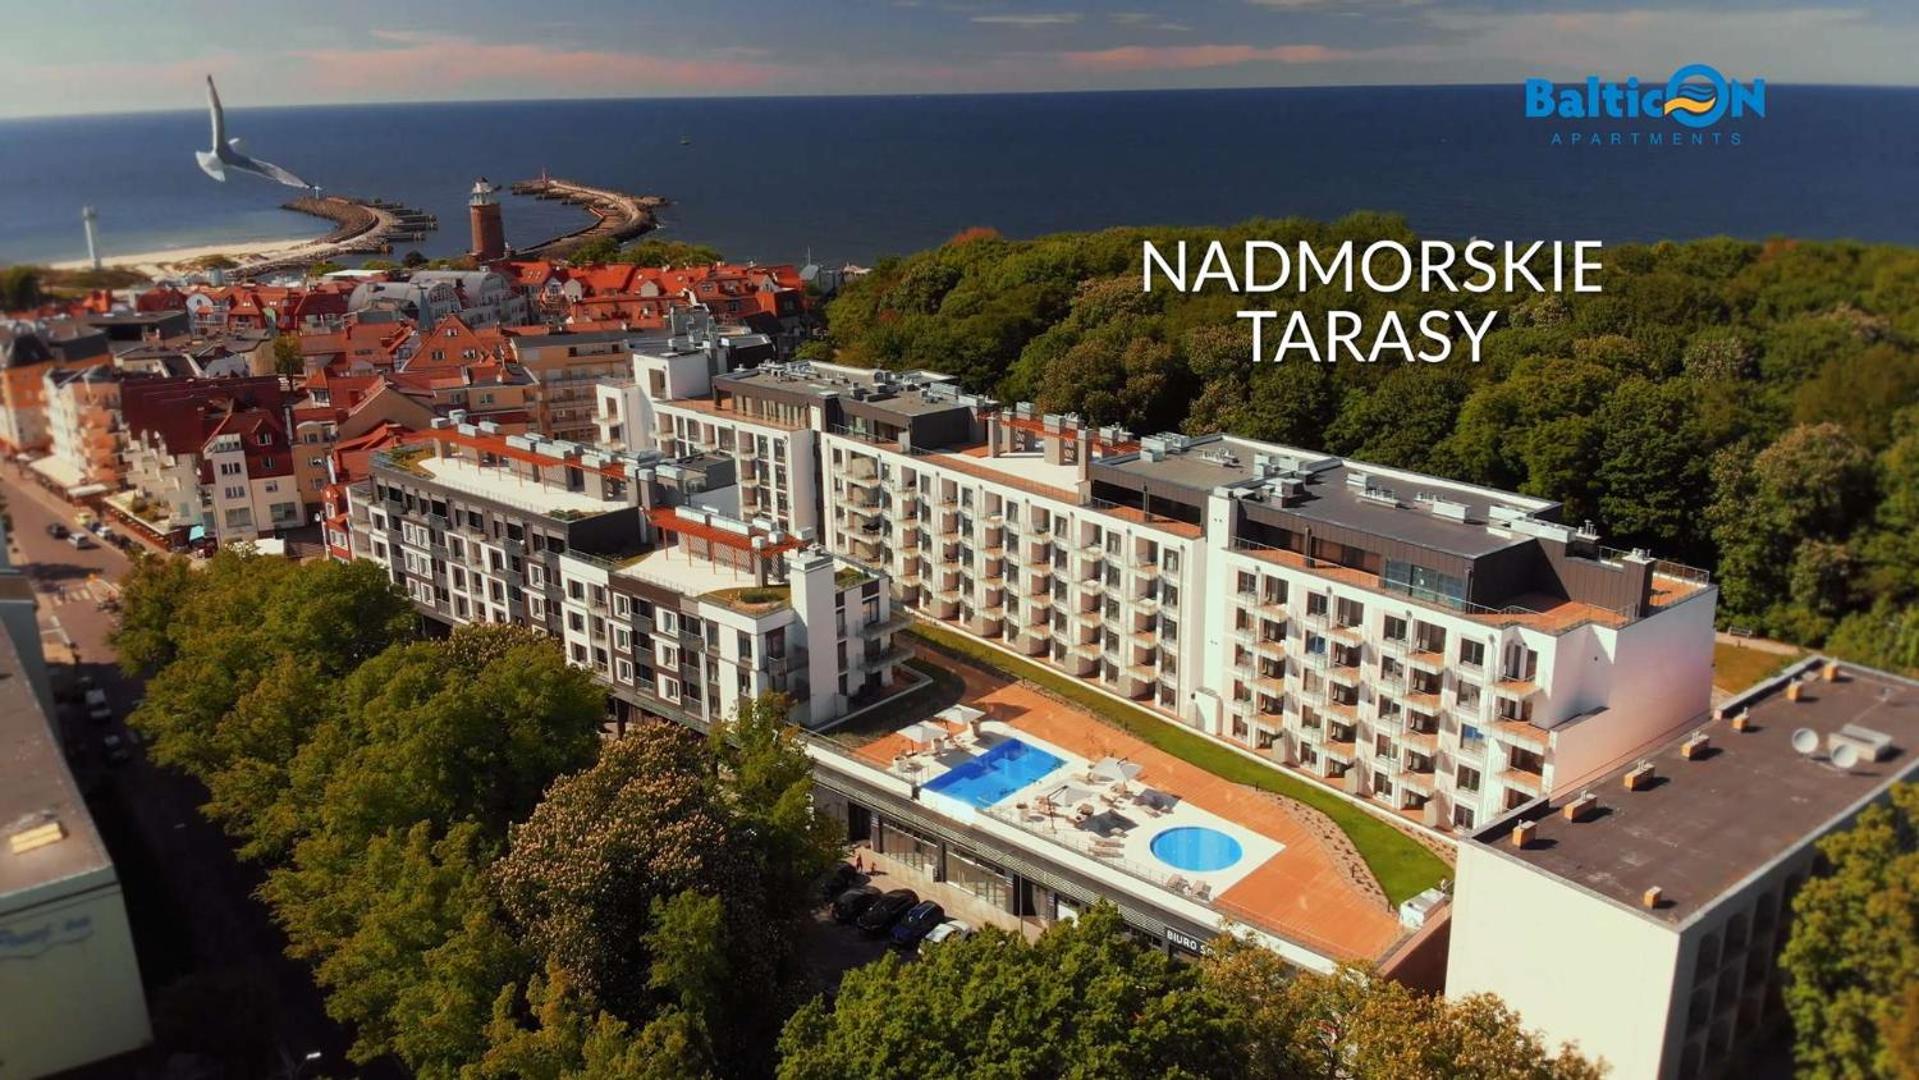 Nadmorskie Tarasy by BalticON